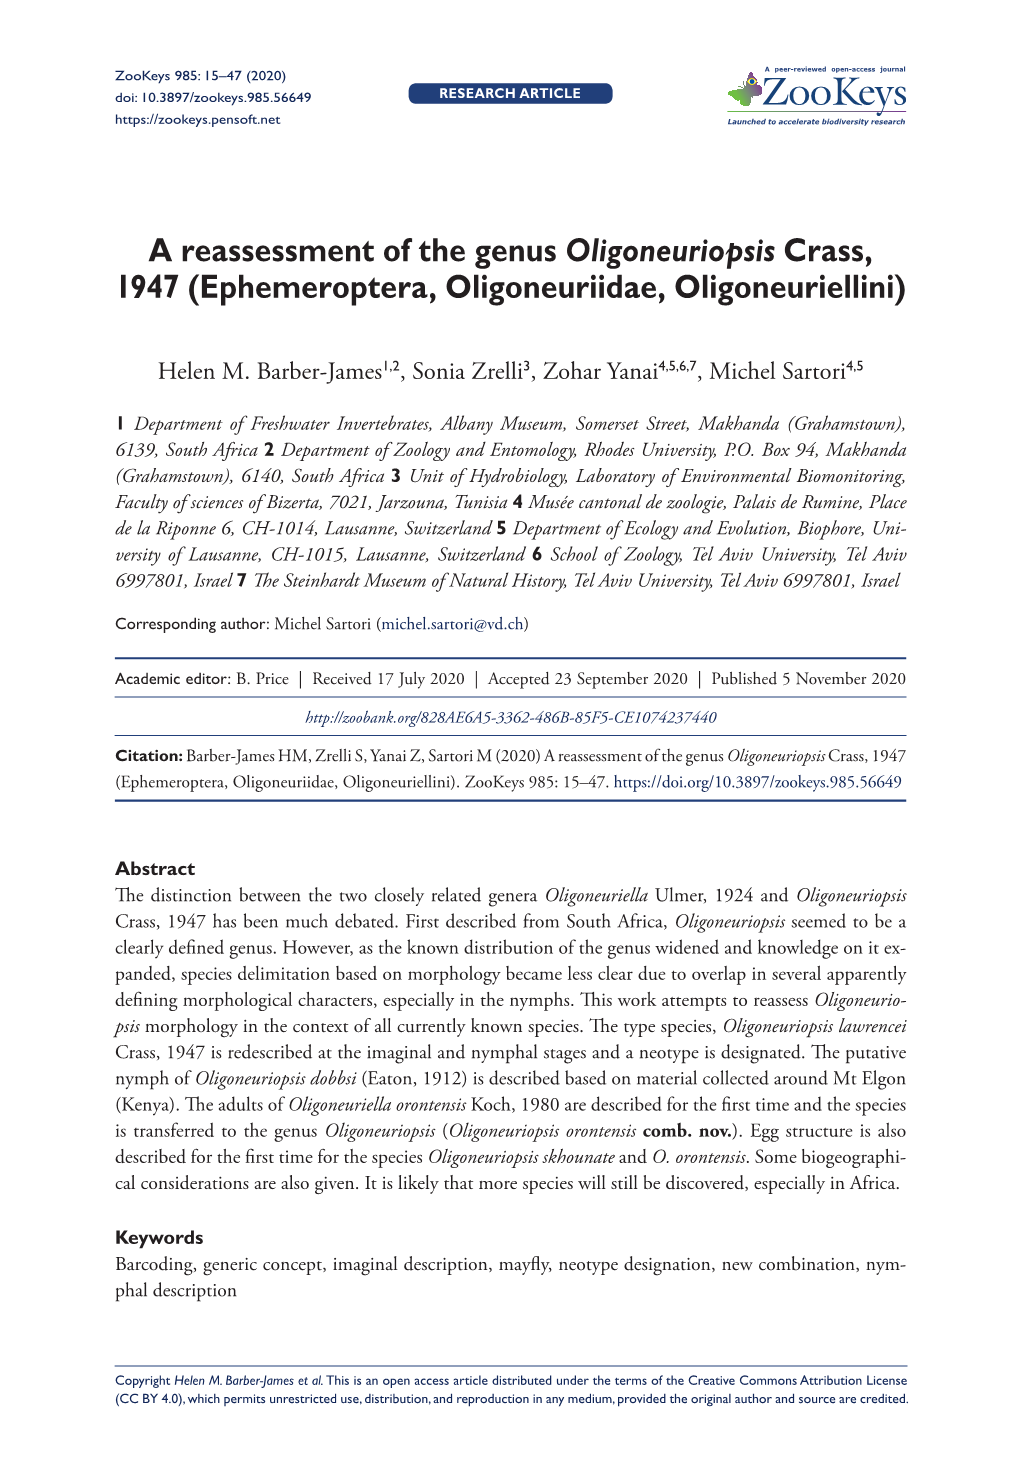 A Reassessment of the Genus Oligoneuriopsis Crass, 1947 (Ephemeroptera, Oligoneuriidae, Oligoneuriellini)